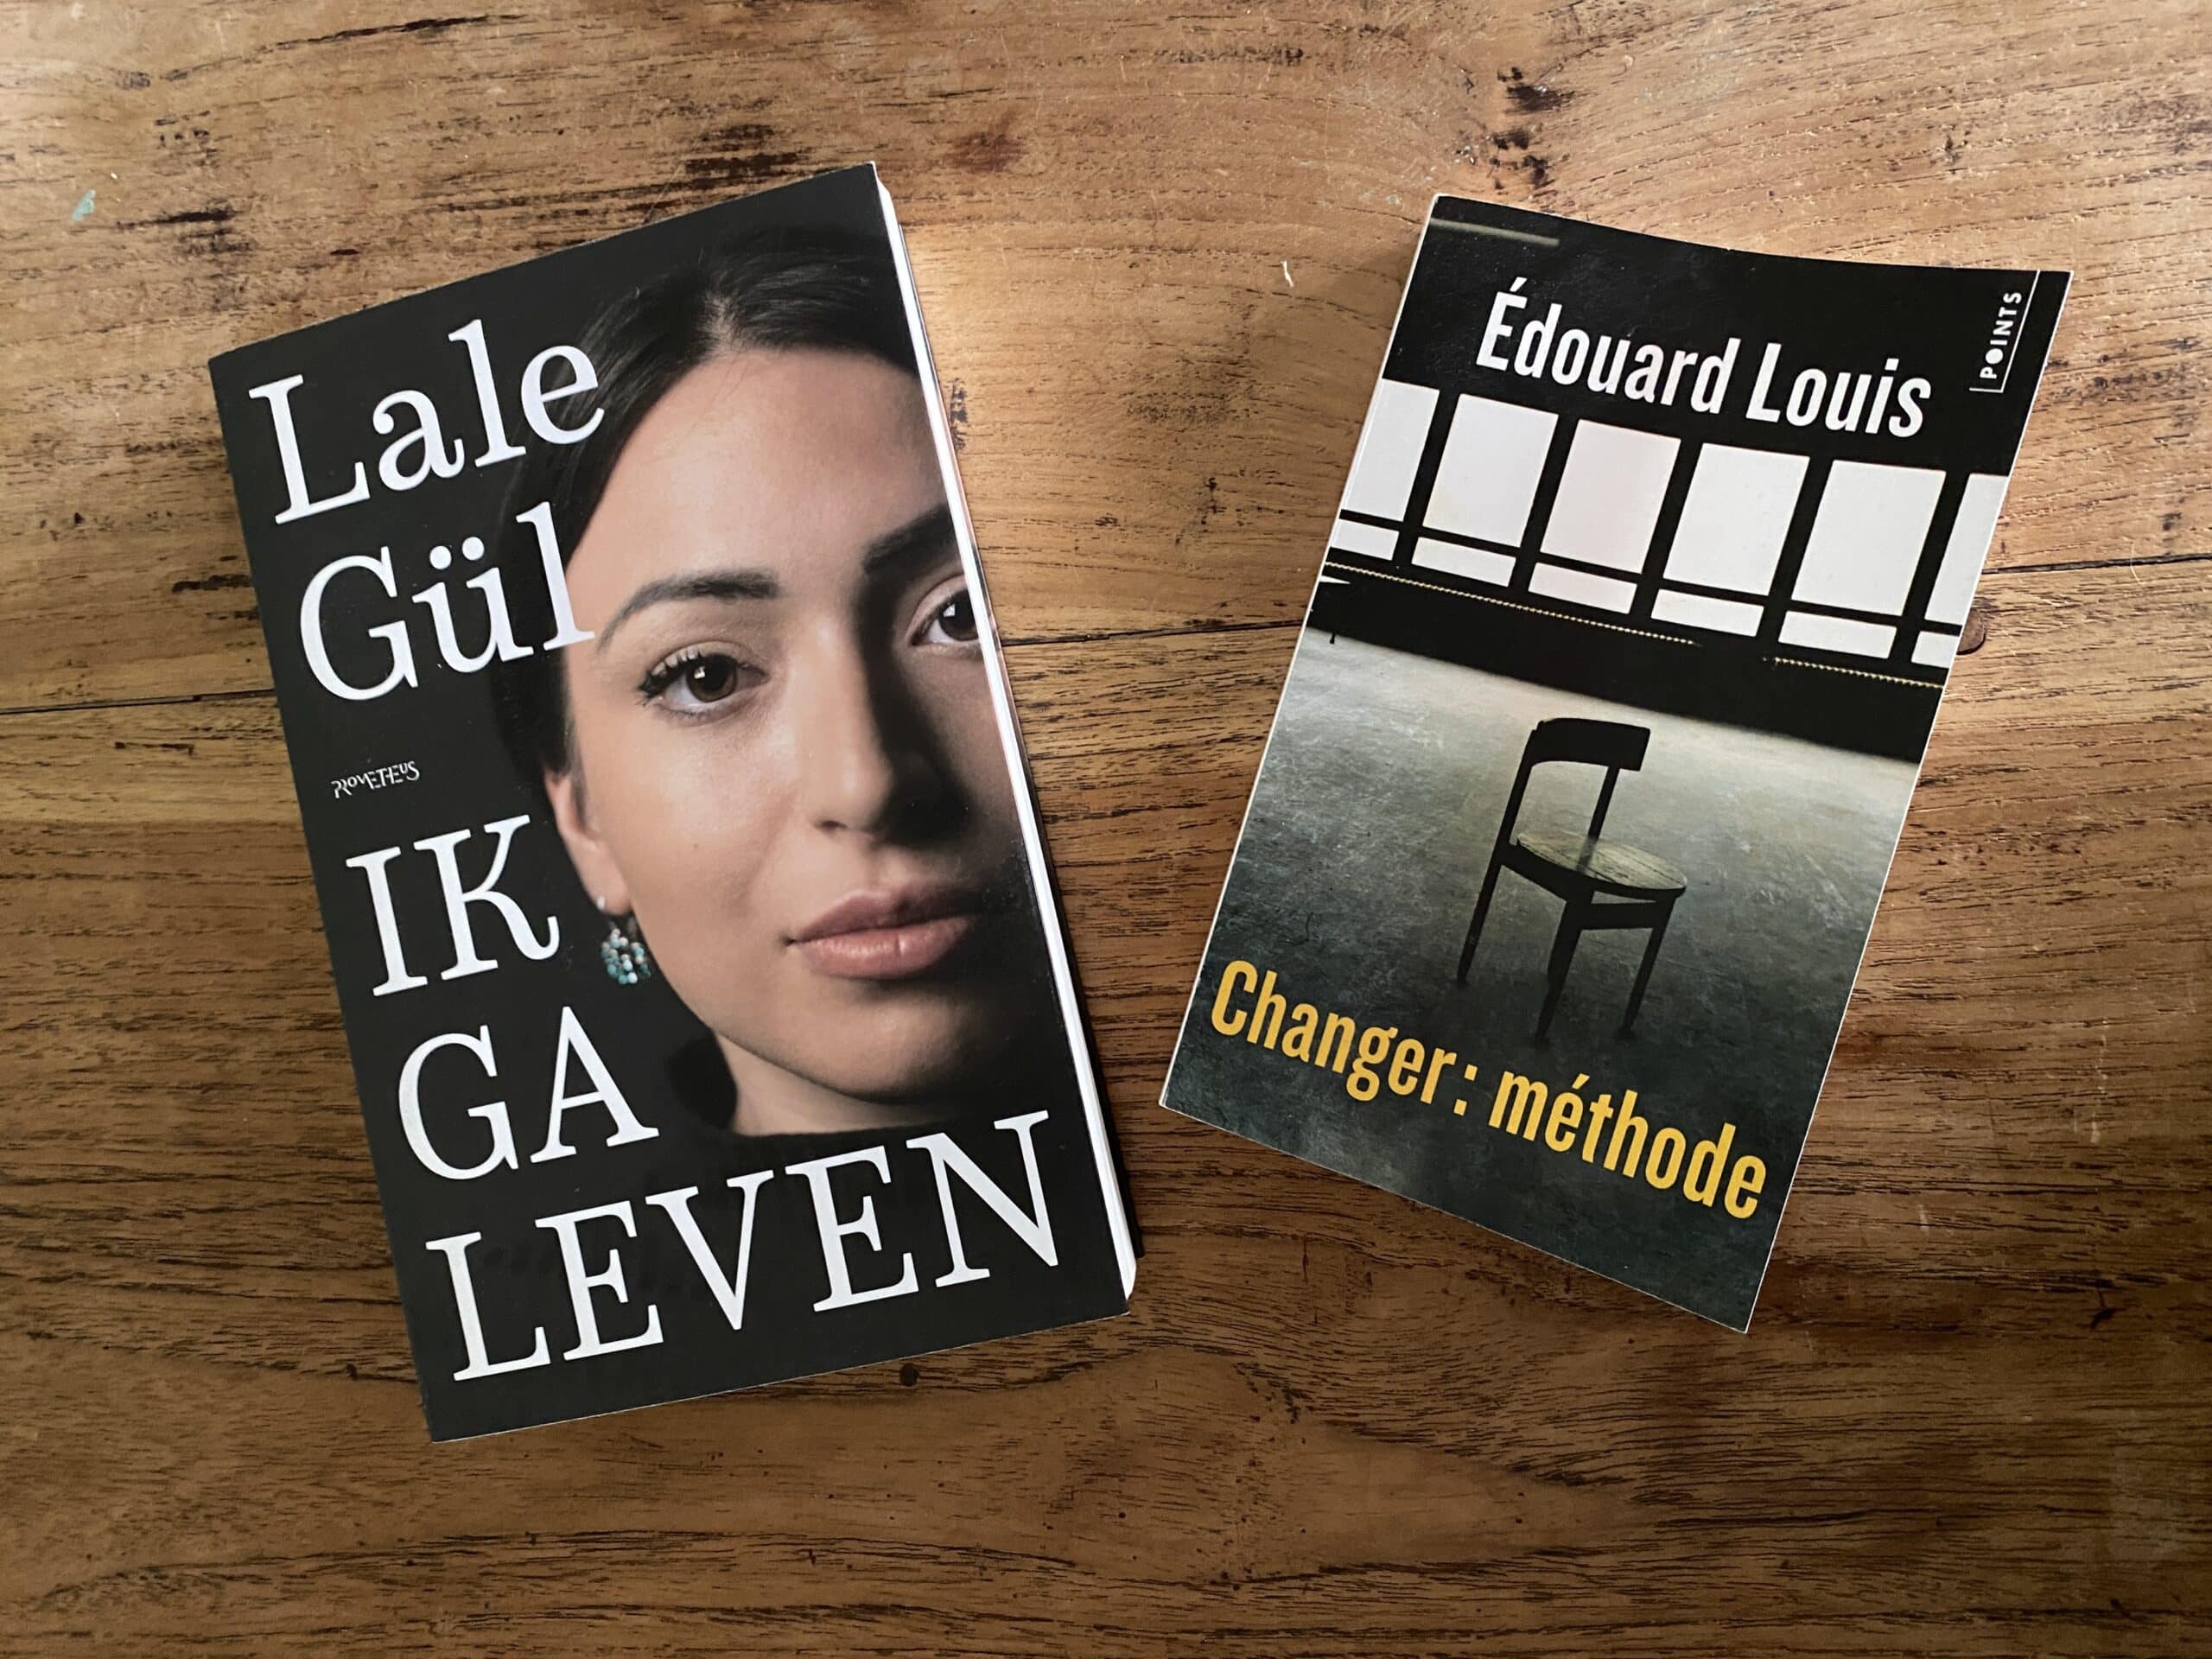 Links 'Ik ga leven' van Lale Gül, rechts 'Changer : méthode' van Édouard Louis